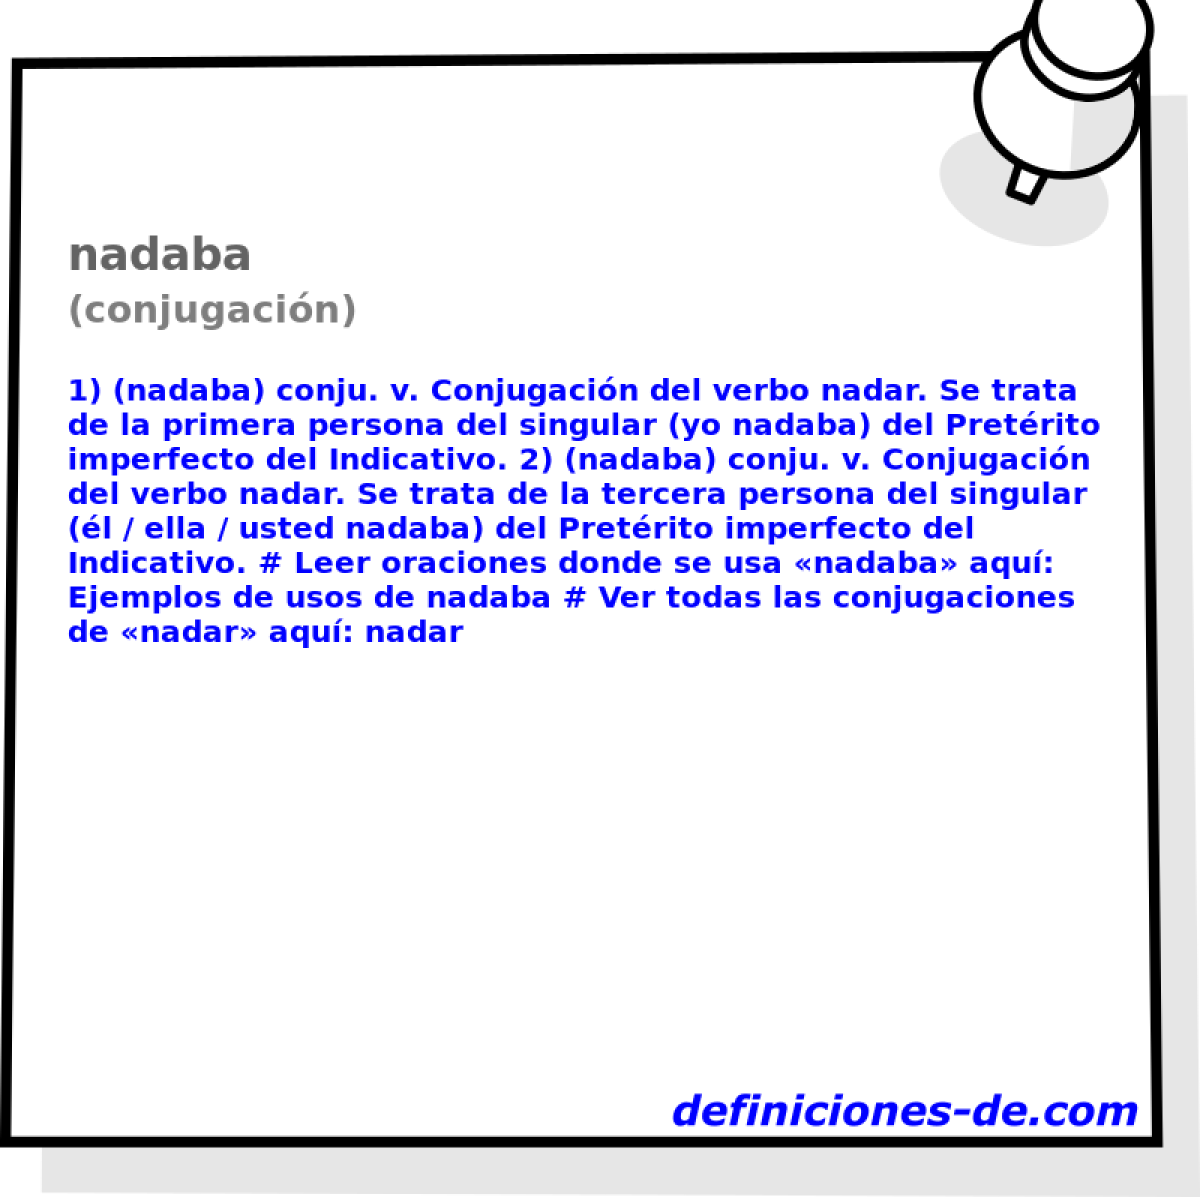 nadaba (conjugacin)